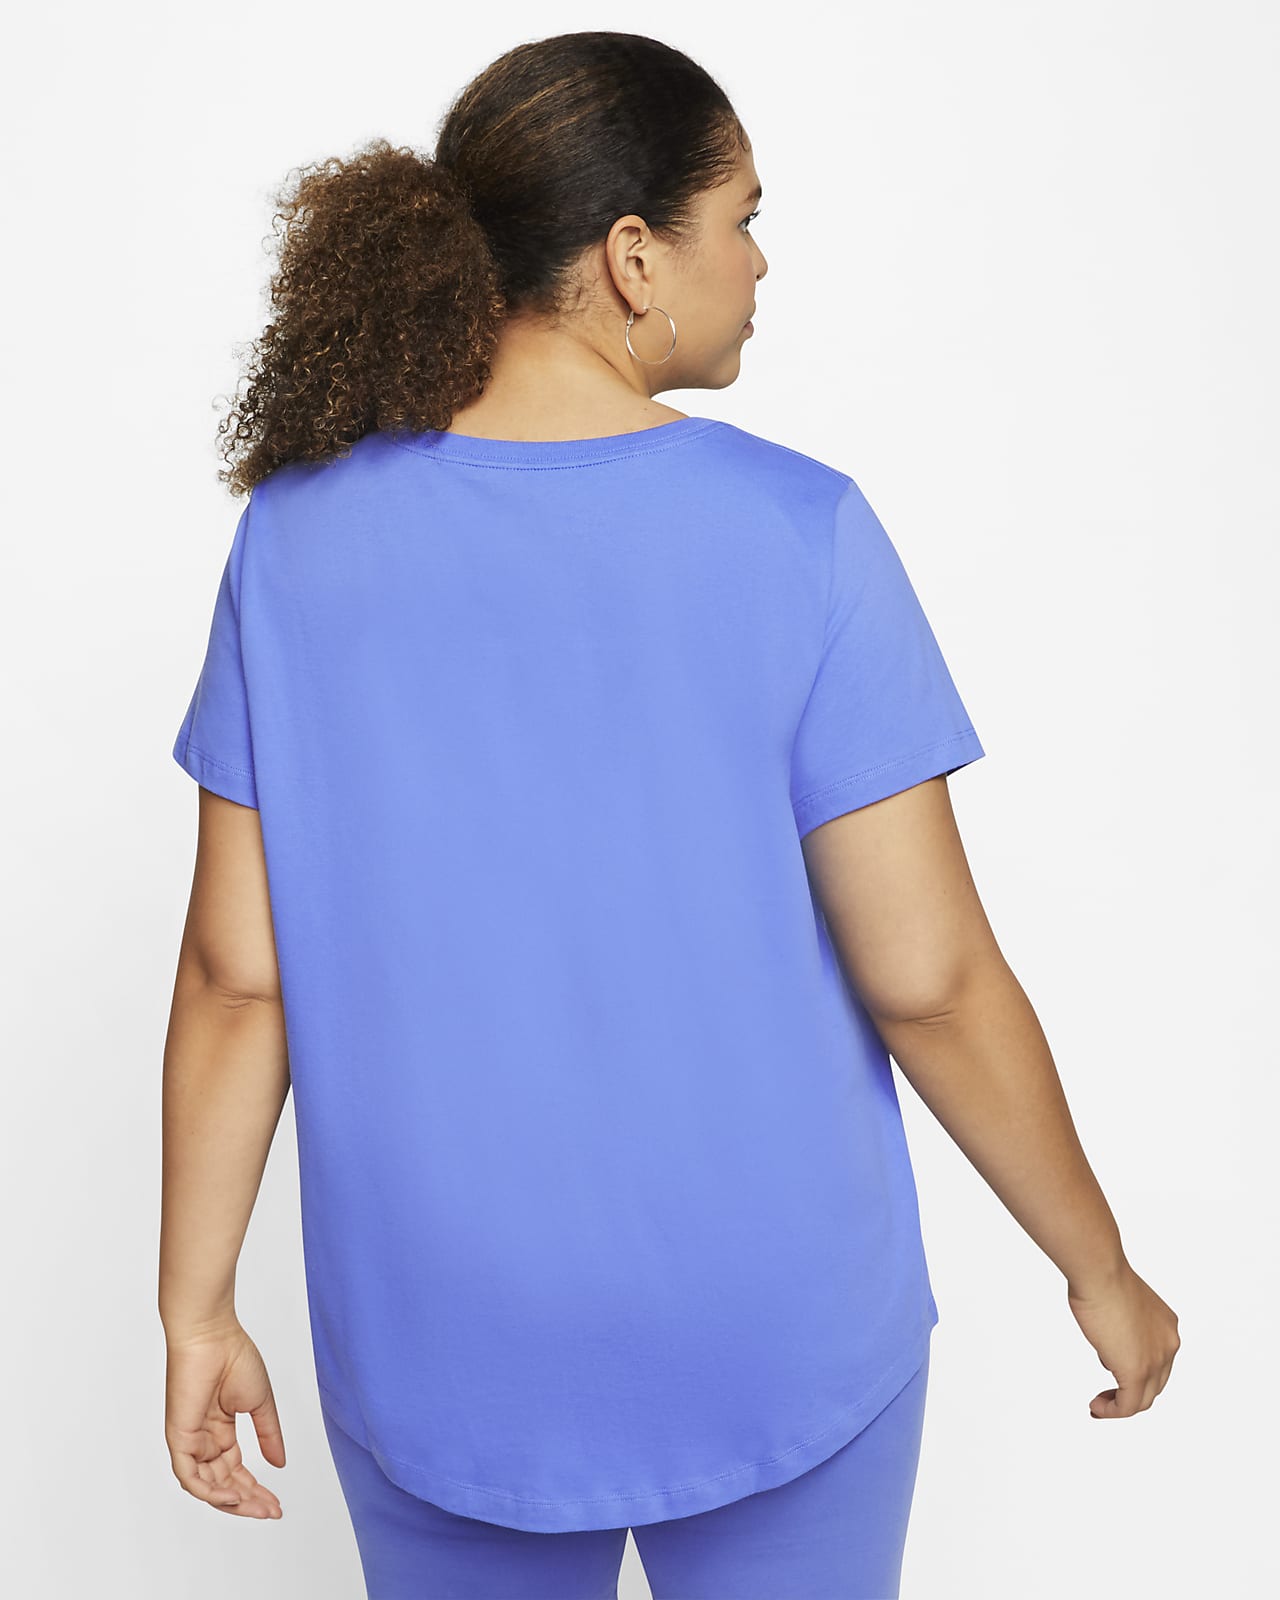 Nike Womens Plus Size T-Shirt